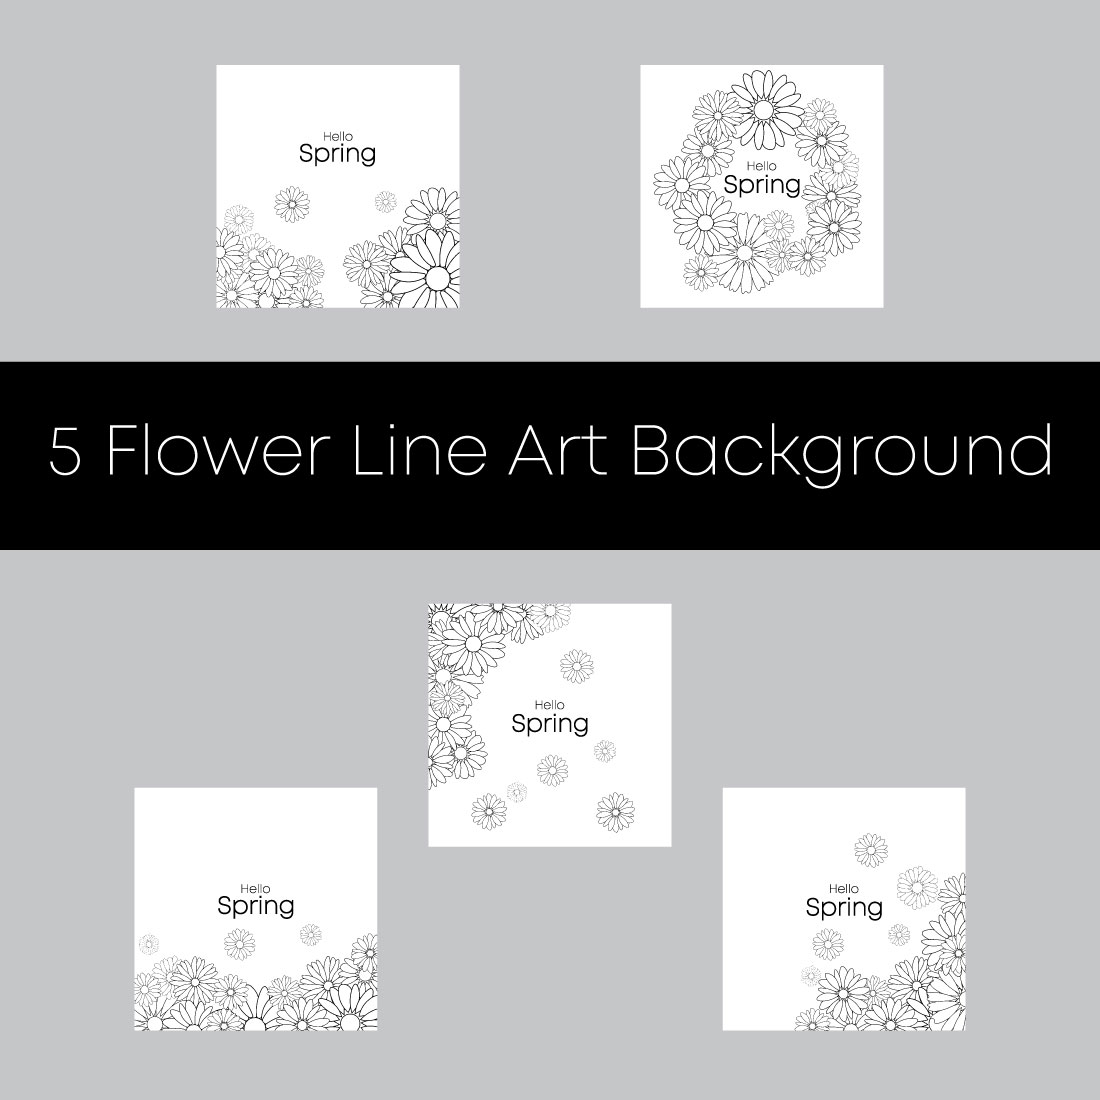 5 Flower Line Art Backgrounds cover image.